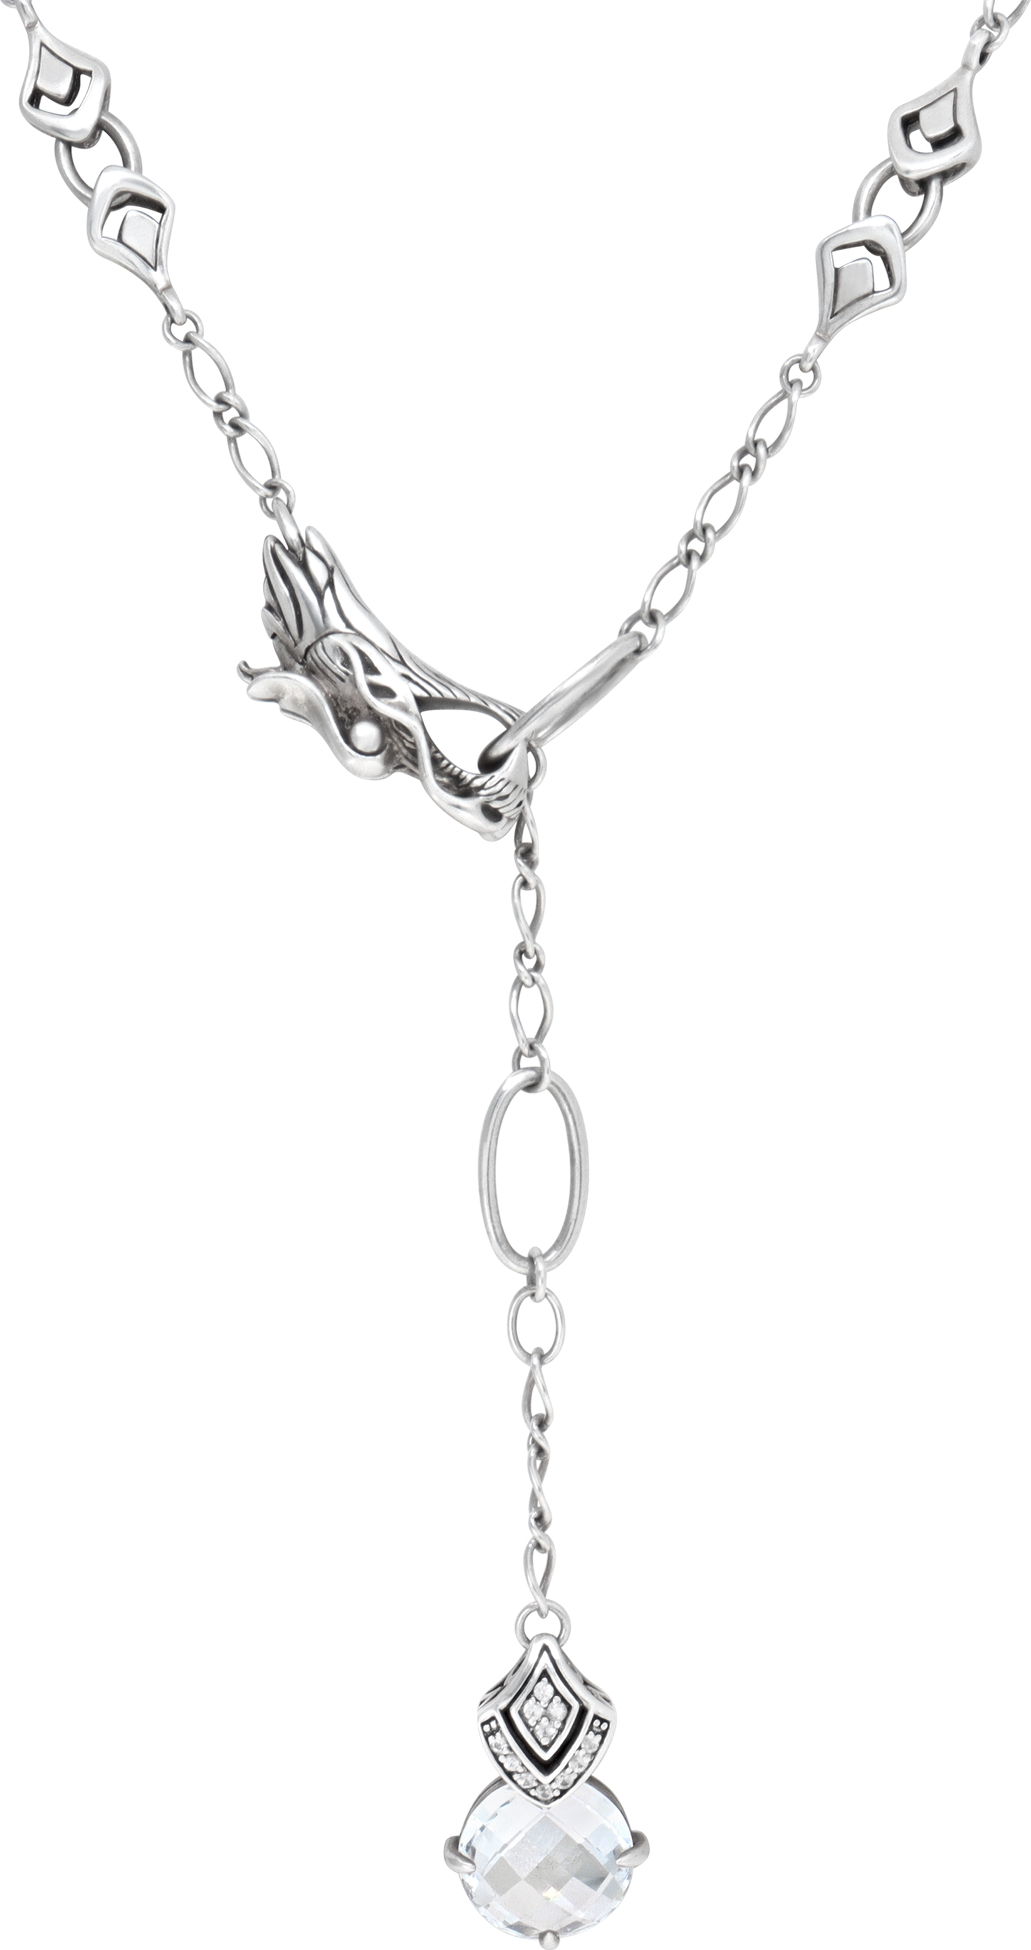 John Hardy Batu Naga Lariat necklace in sterling silver